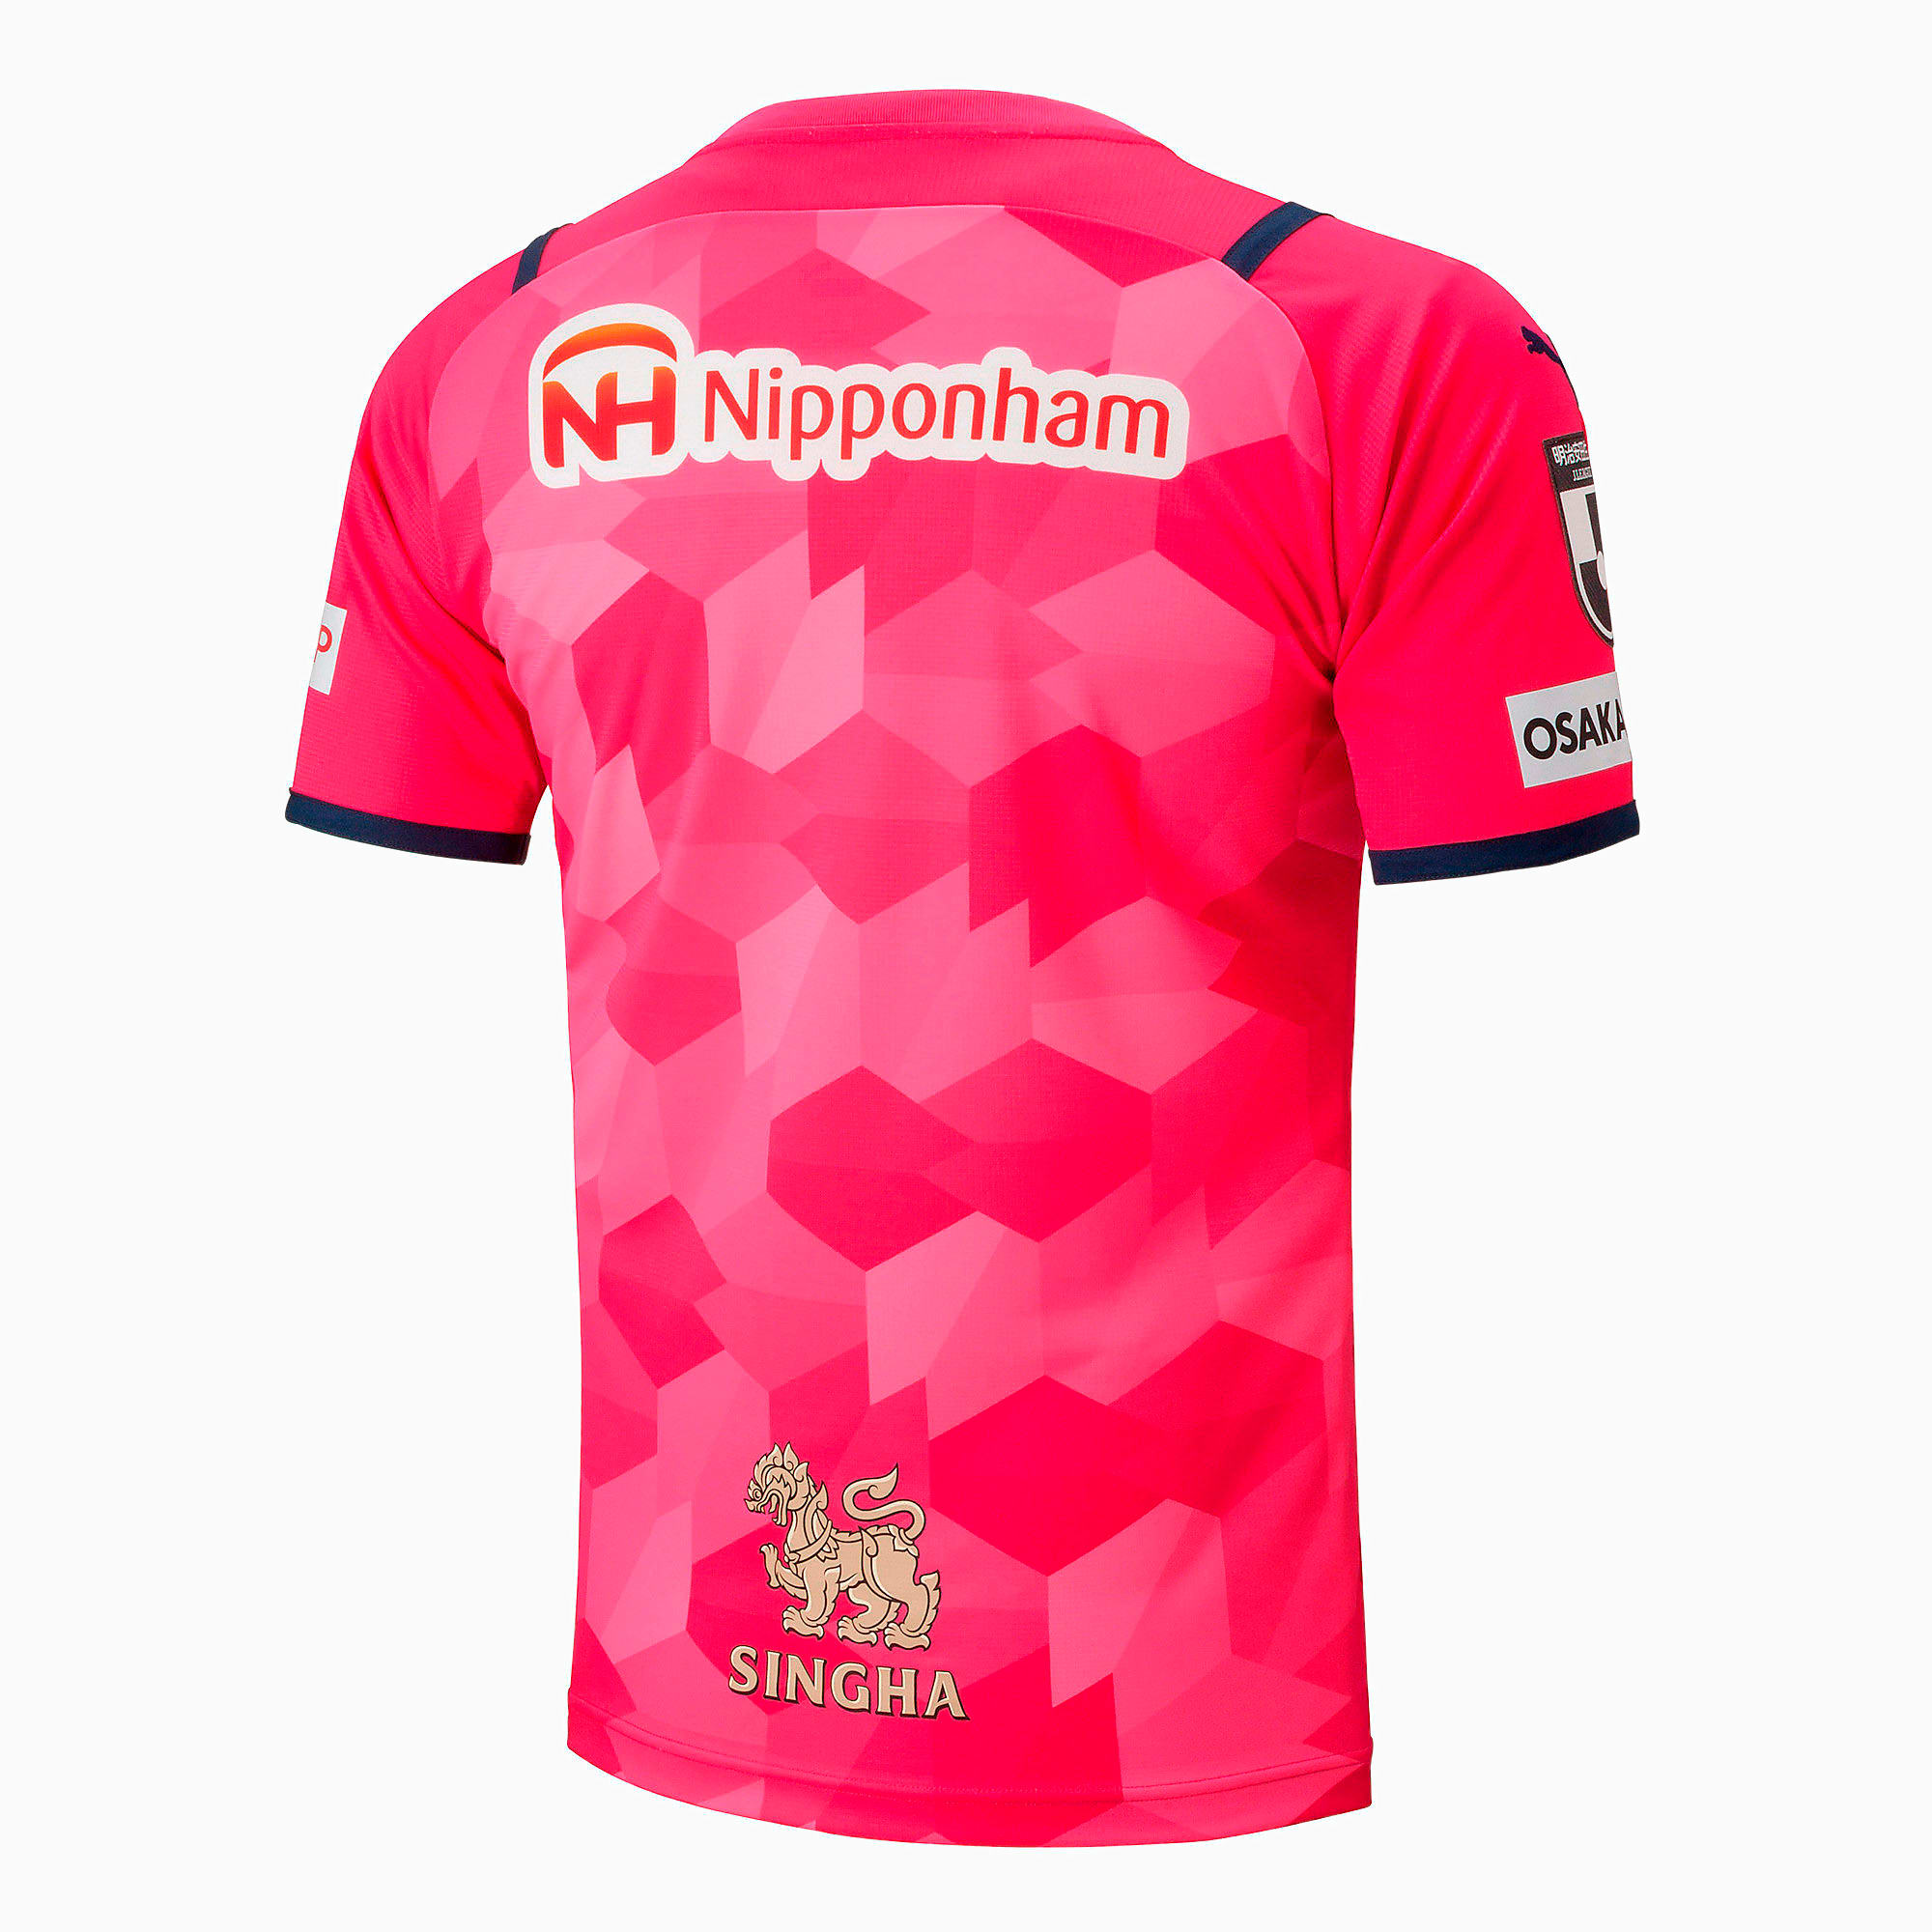 Puma公式 セレッソ大阪 21 ホーム 半袖 ゲームシャツ ユニフォーム サッカー メンズ C Pink プーマ セレッソ大阪 プーマ